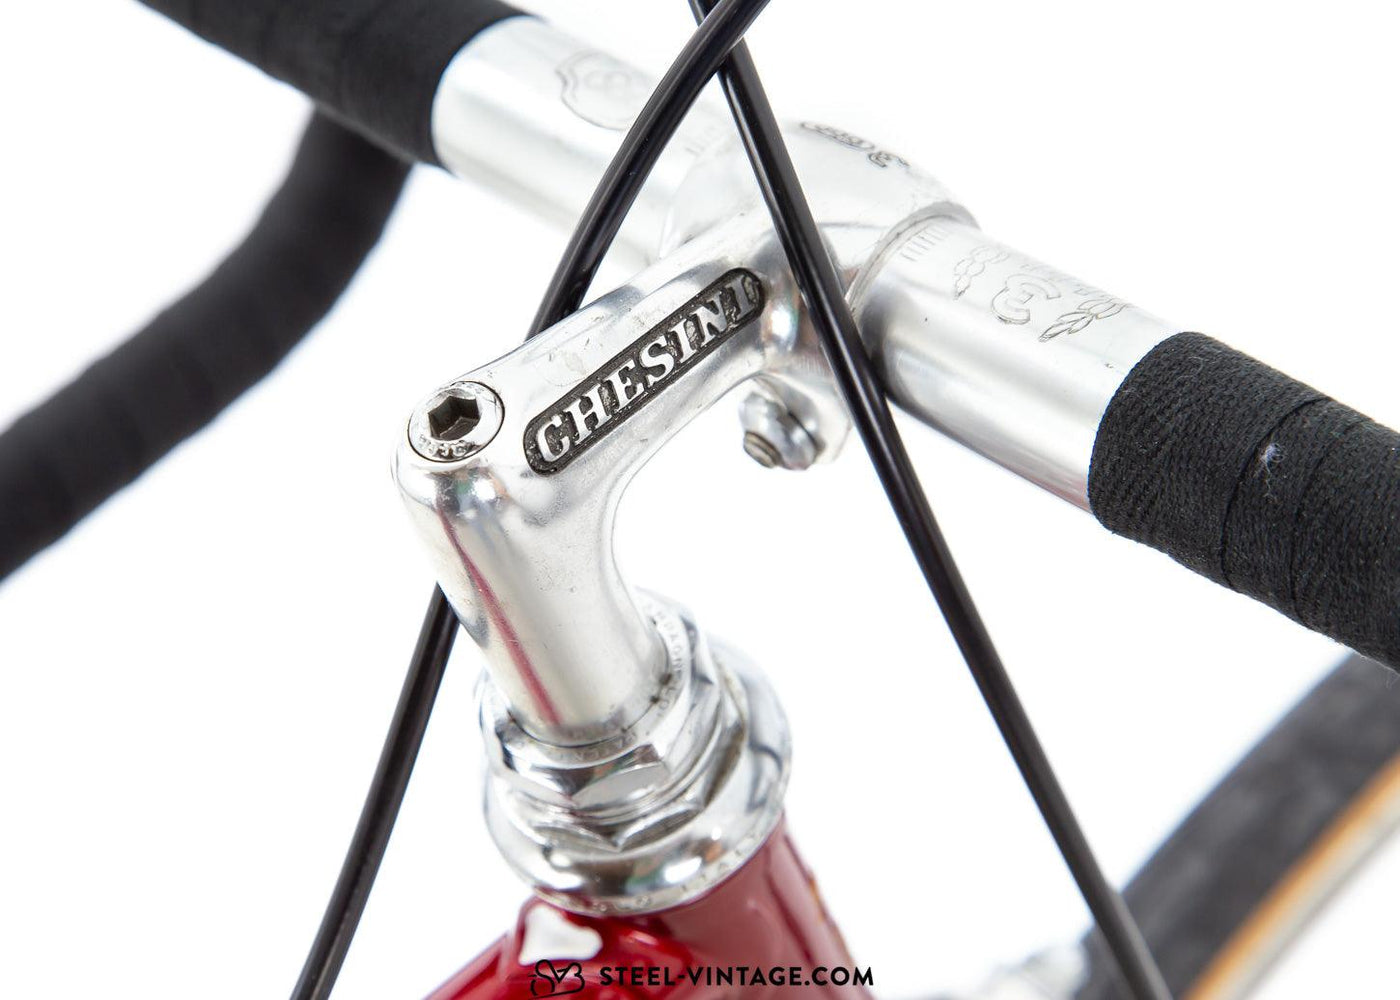 Chesini Precision Fine Road Bicycle 1980s | Steel Vintage Bikes